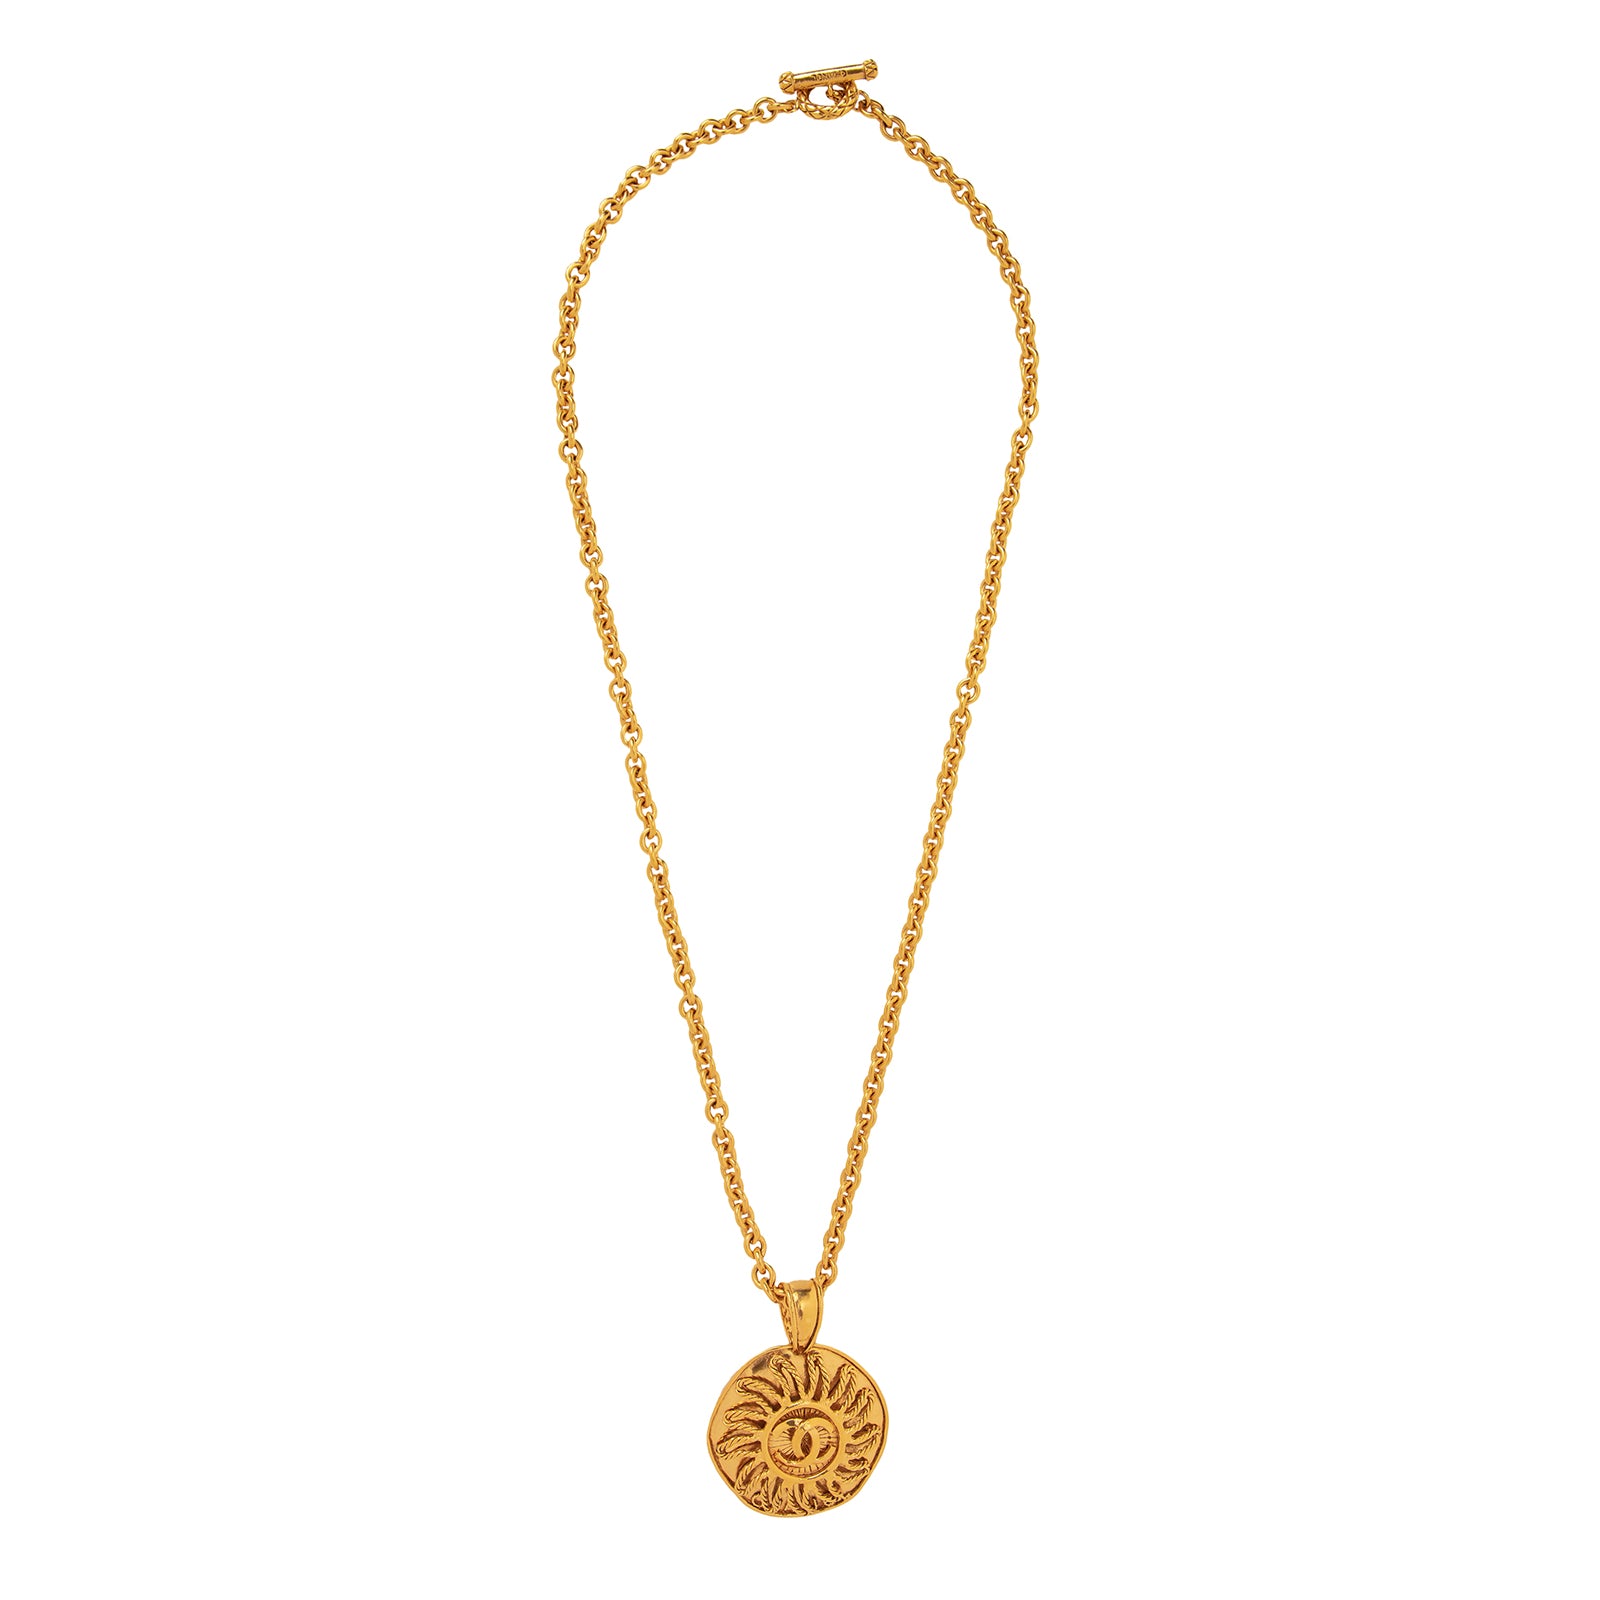 Antique & Vintage Jewelry Chanel Freeform Logo Disk Pendant Necklace - Necklaces - Broken English Jewelry